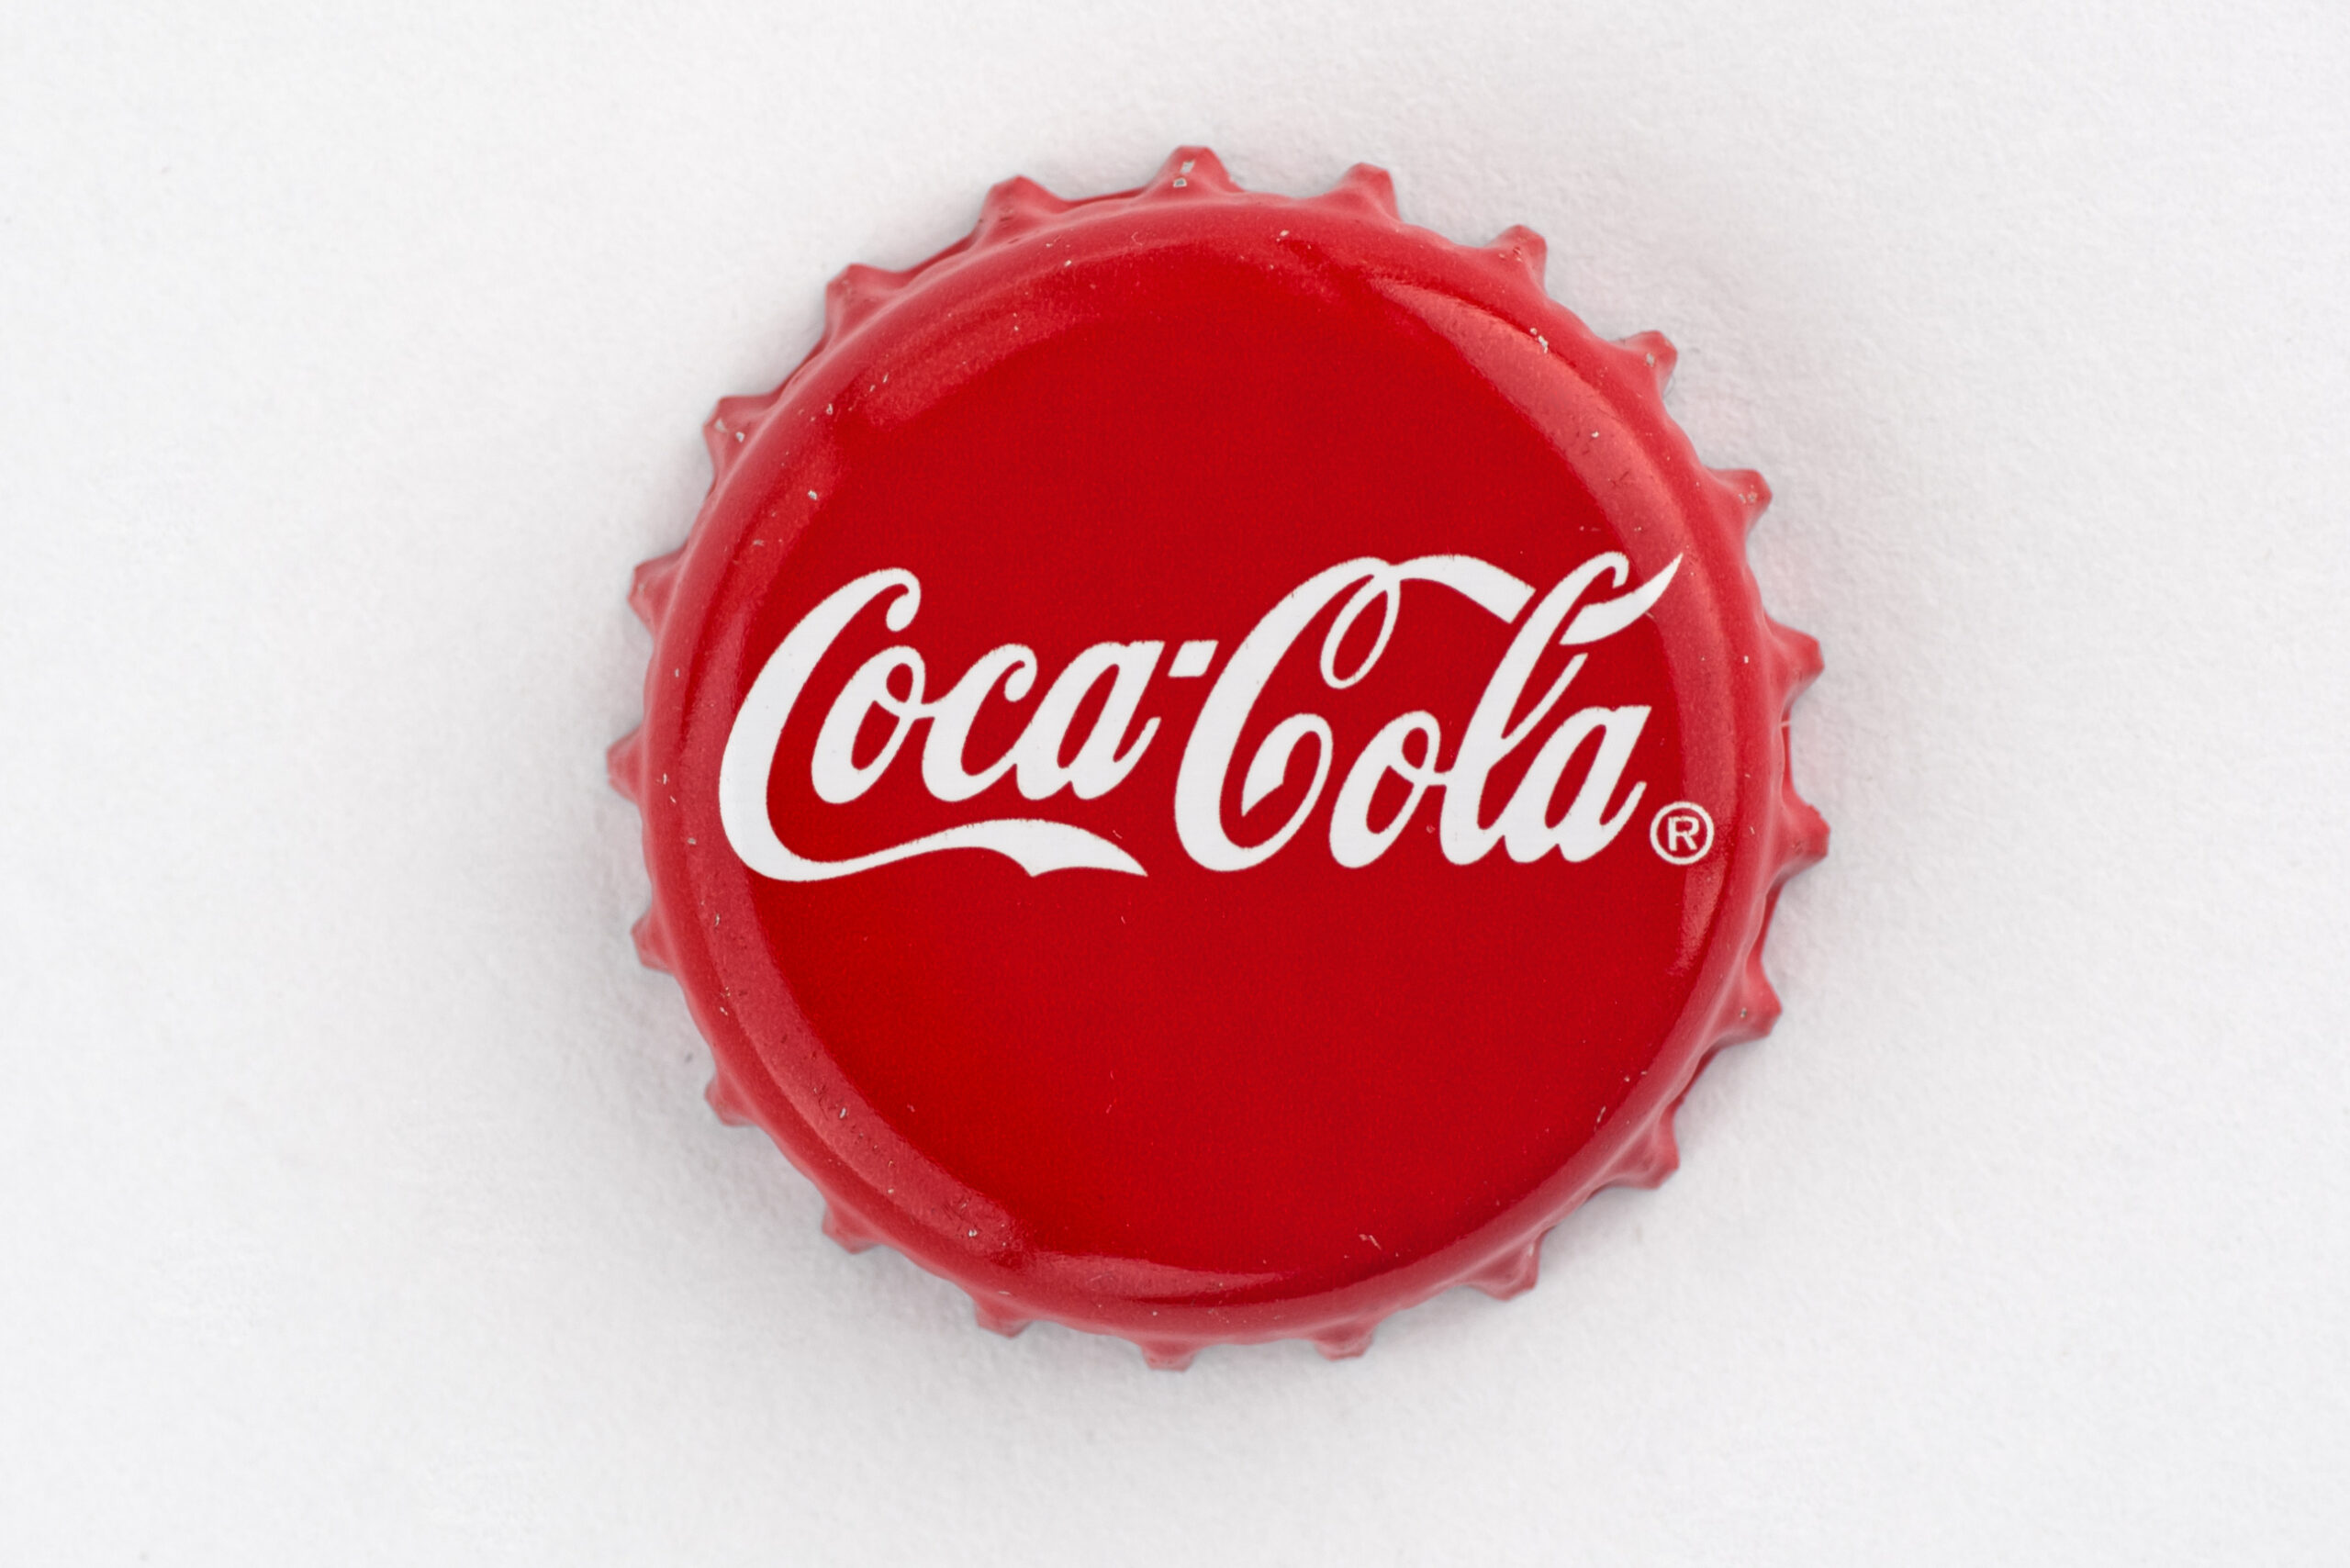 "Muenster, Germany - September 10, 2011: Coca cola bottle cap"